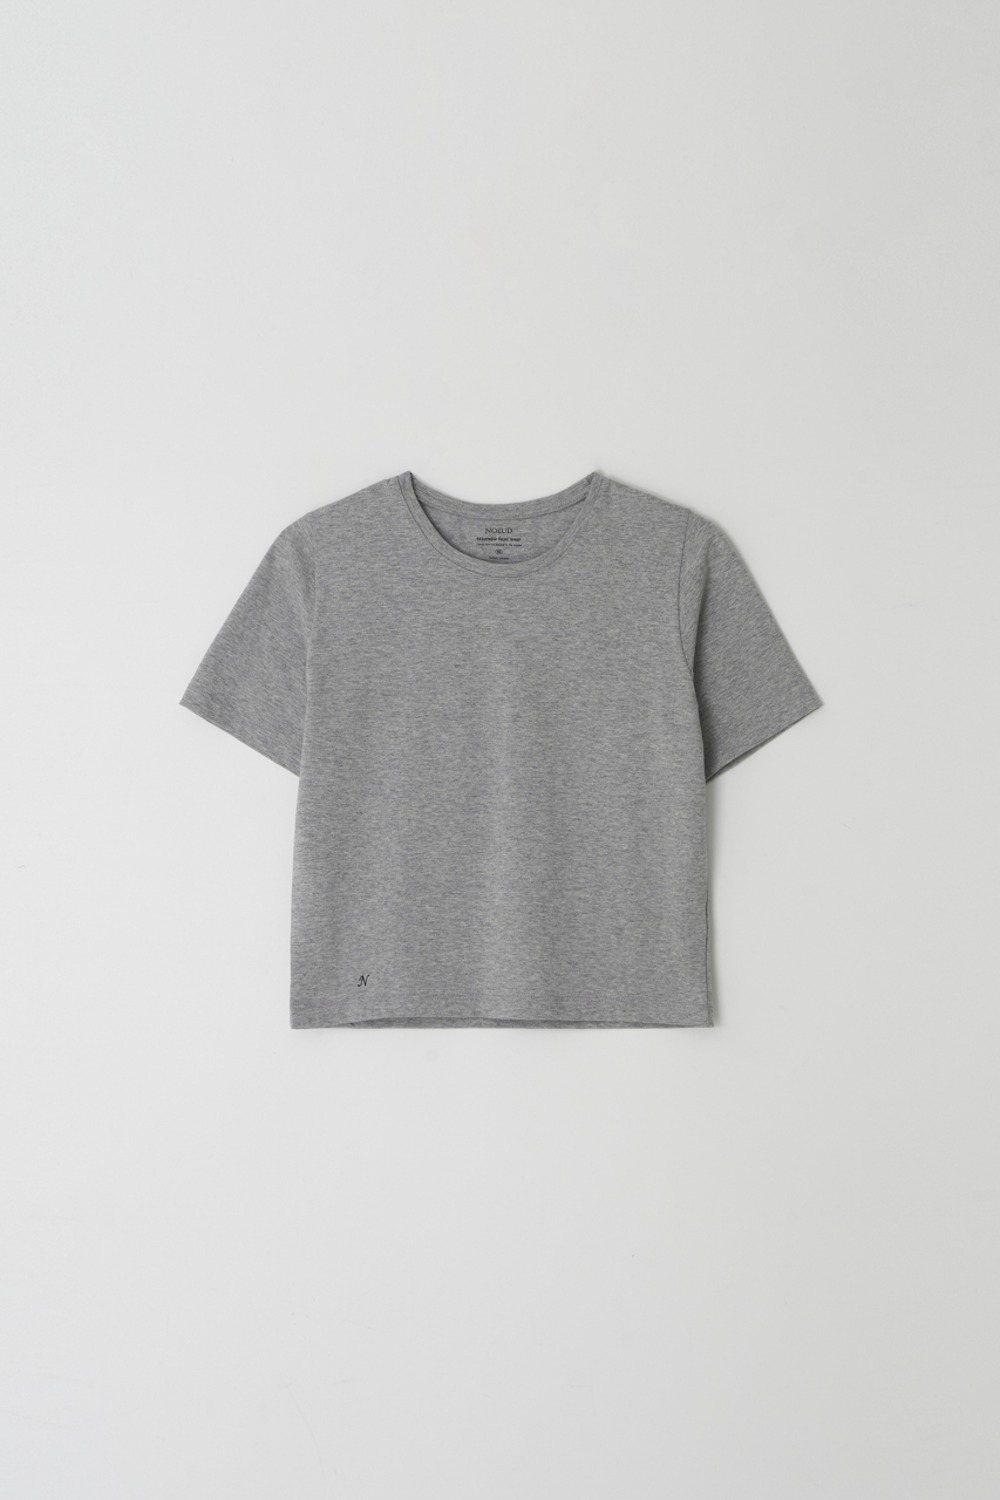 Silket cotton short sleeves (Gray)